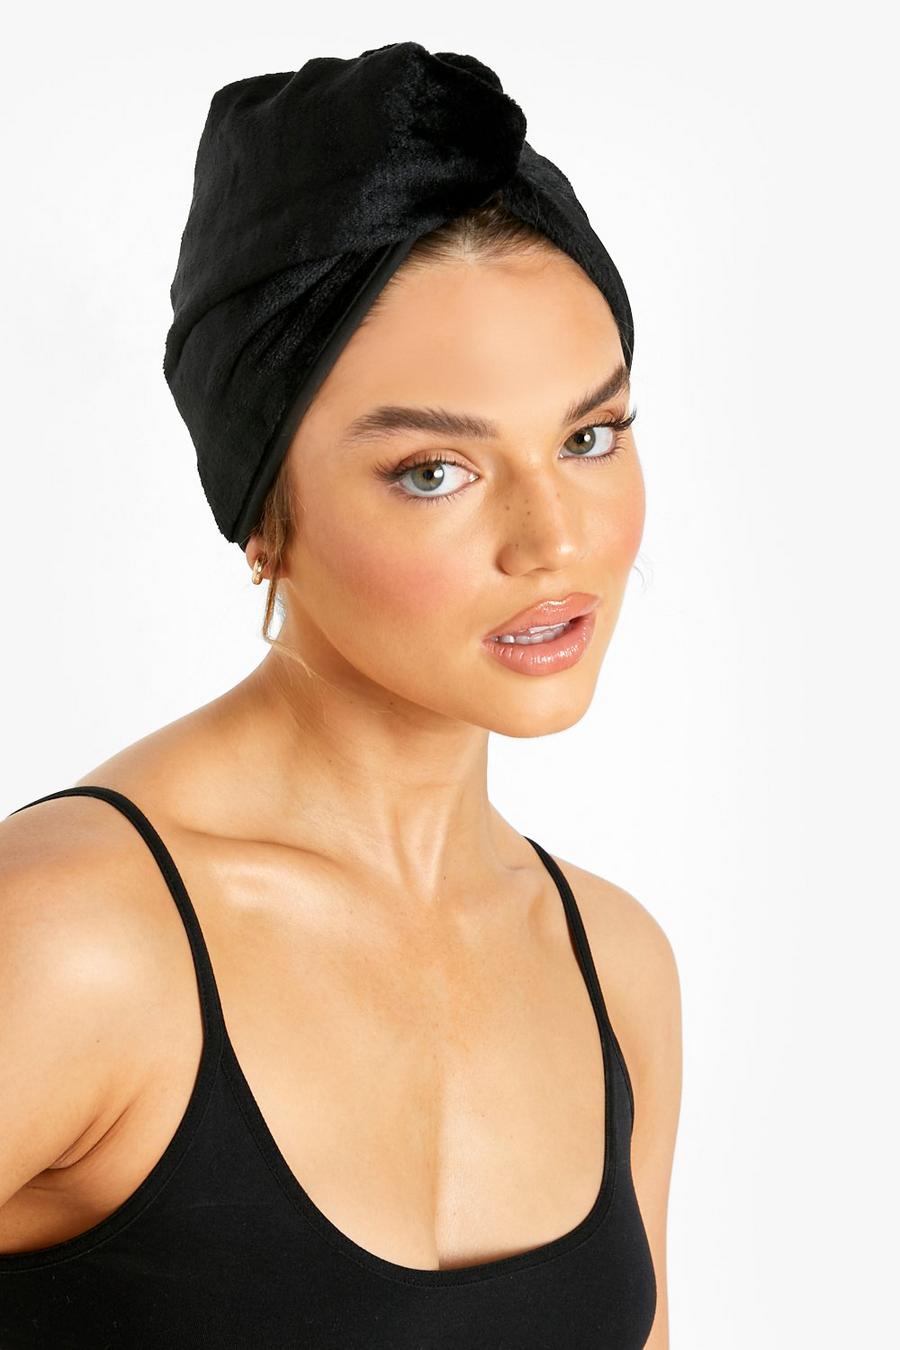 Boohoo Beauty -  Serviette turban avec fermeture à bouton, Black schwarz